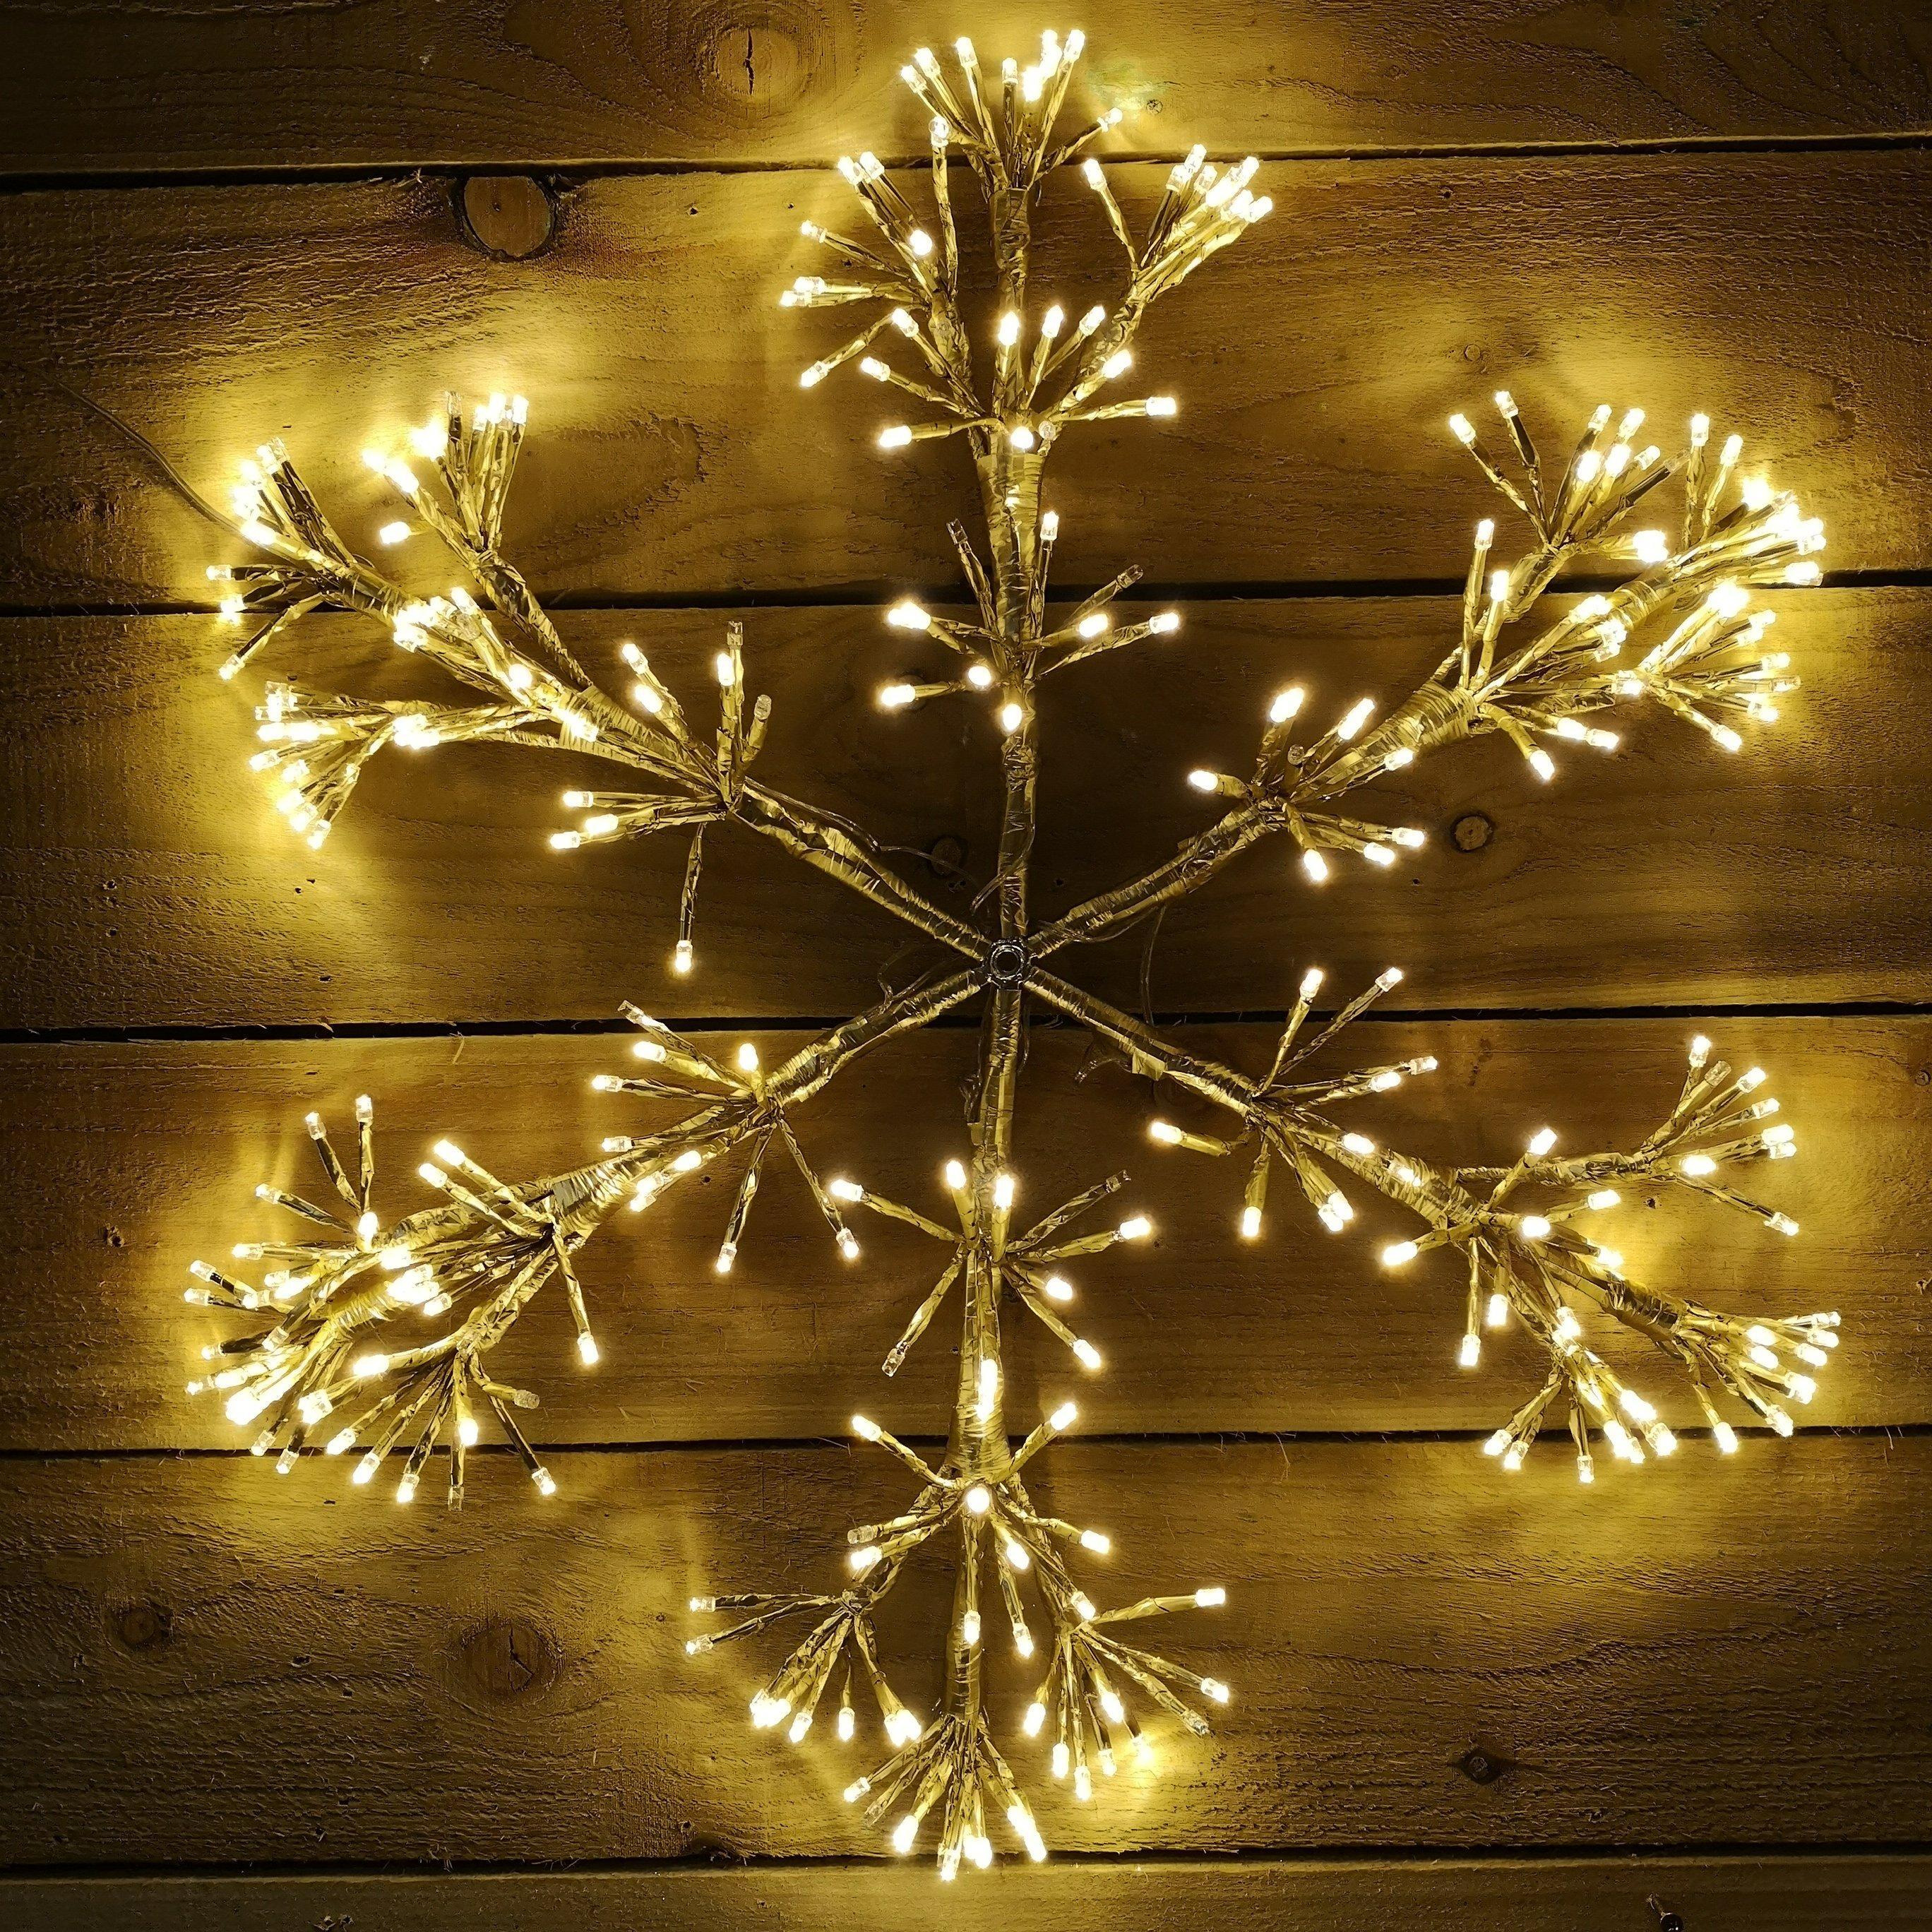 60cm Gold Starburst Snowflake Wall Window Decoration with 300 Warm White LEDs - image 1